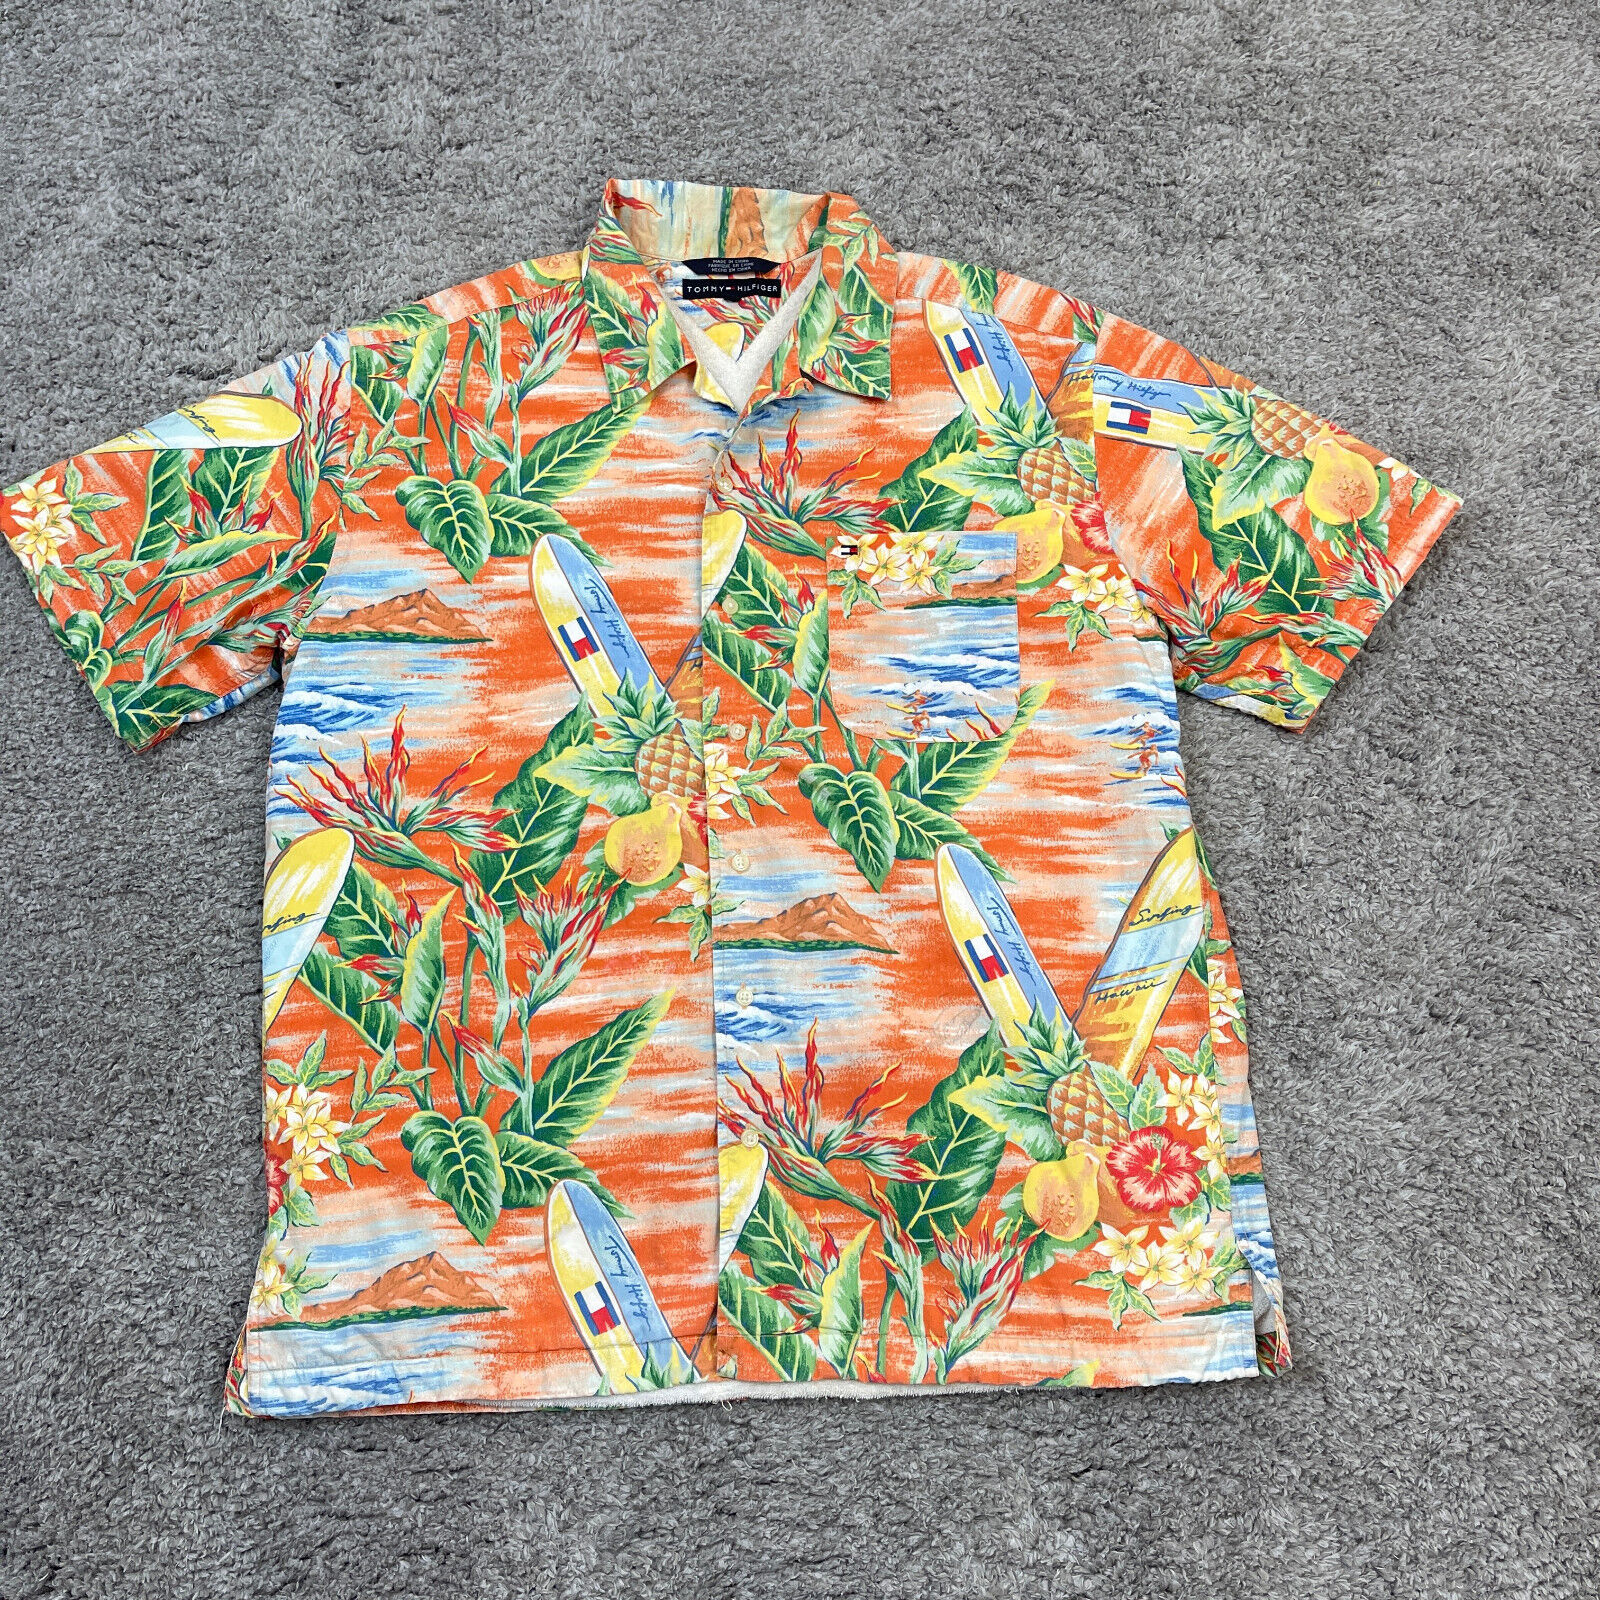 VINTAGE 50s 60s Style Hawaiian Cabana Terry Cloth Lined Beach Towel Shirt Large